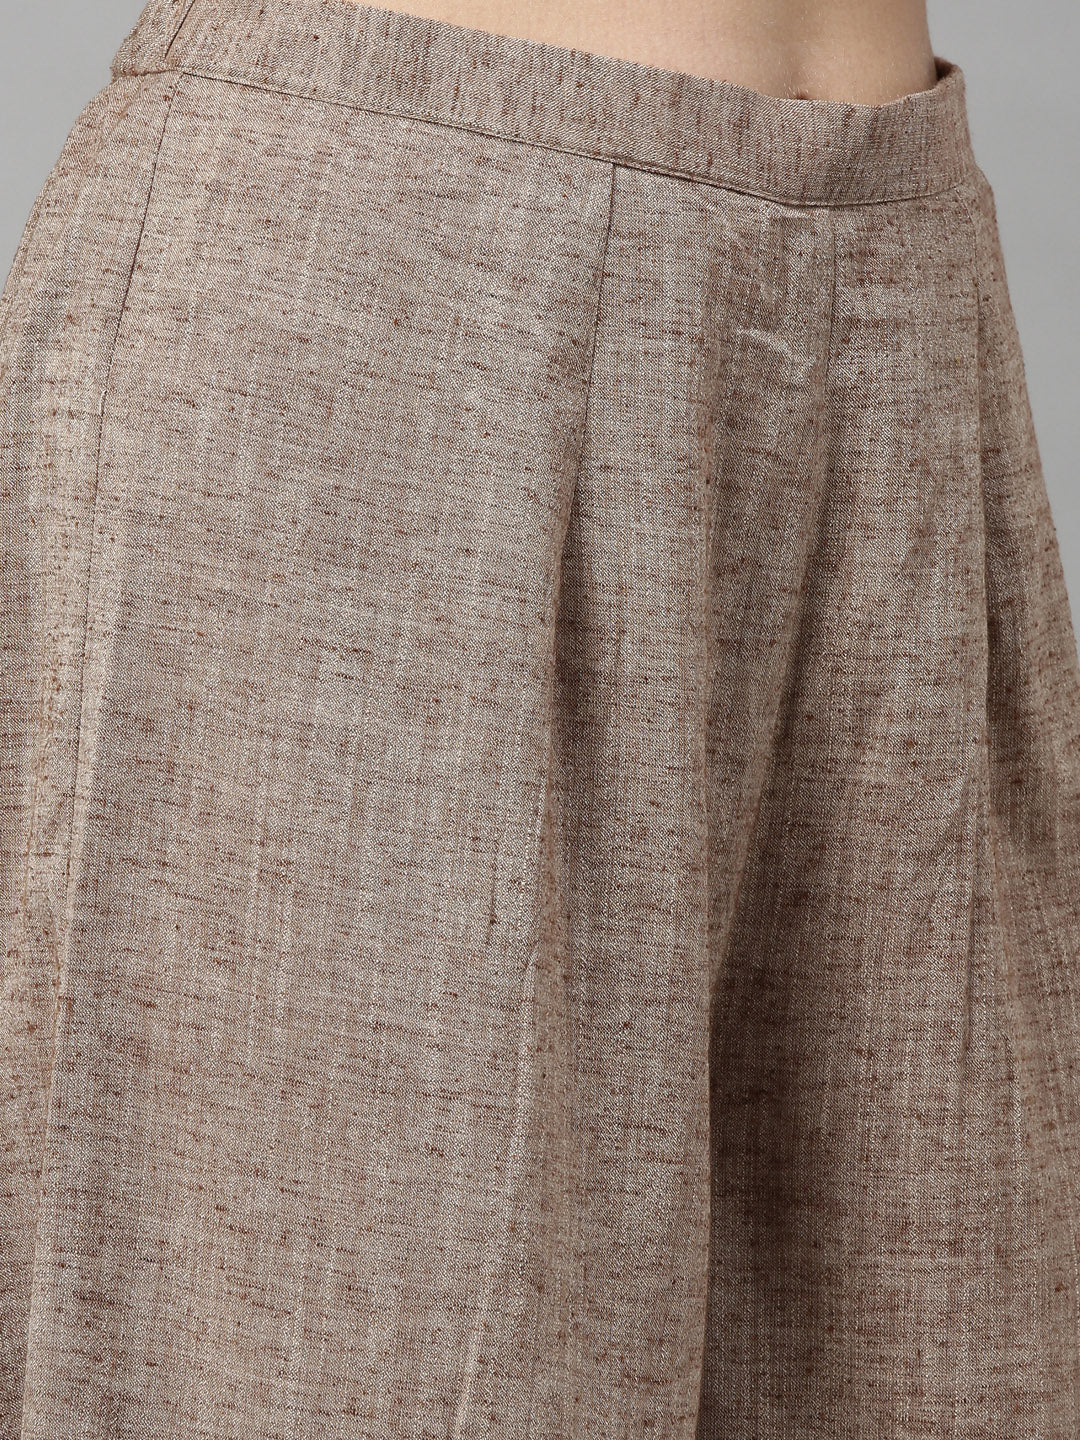 Neeru's Beige Maroon Color Rayon Fabric Tunic Set